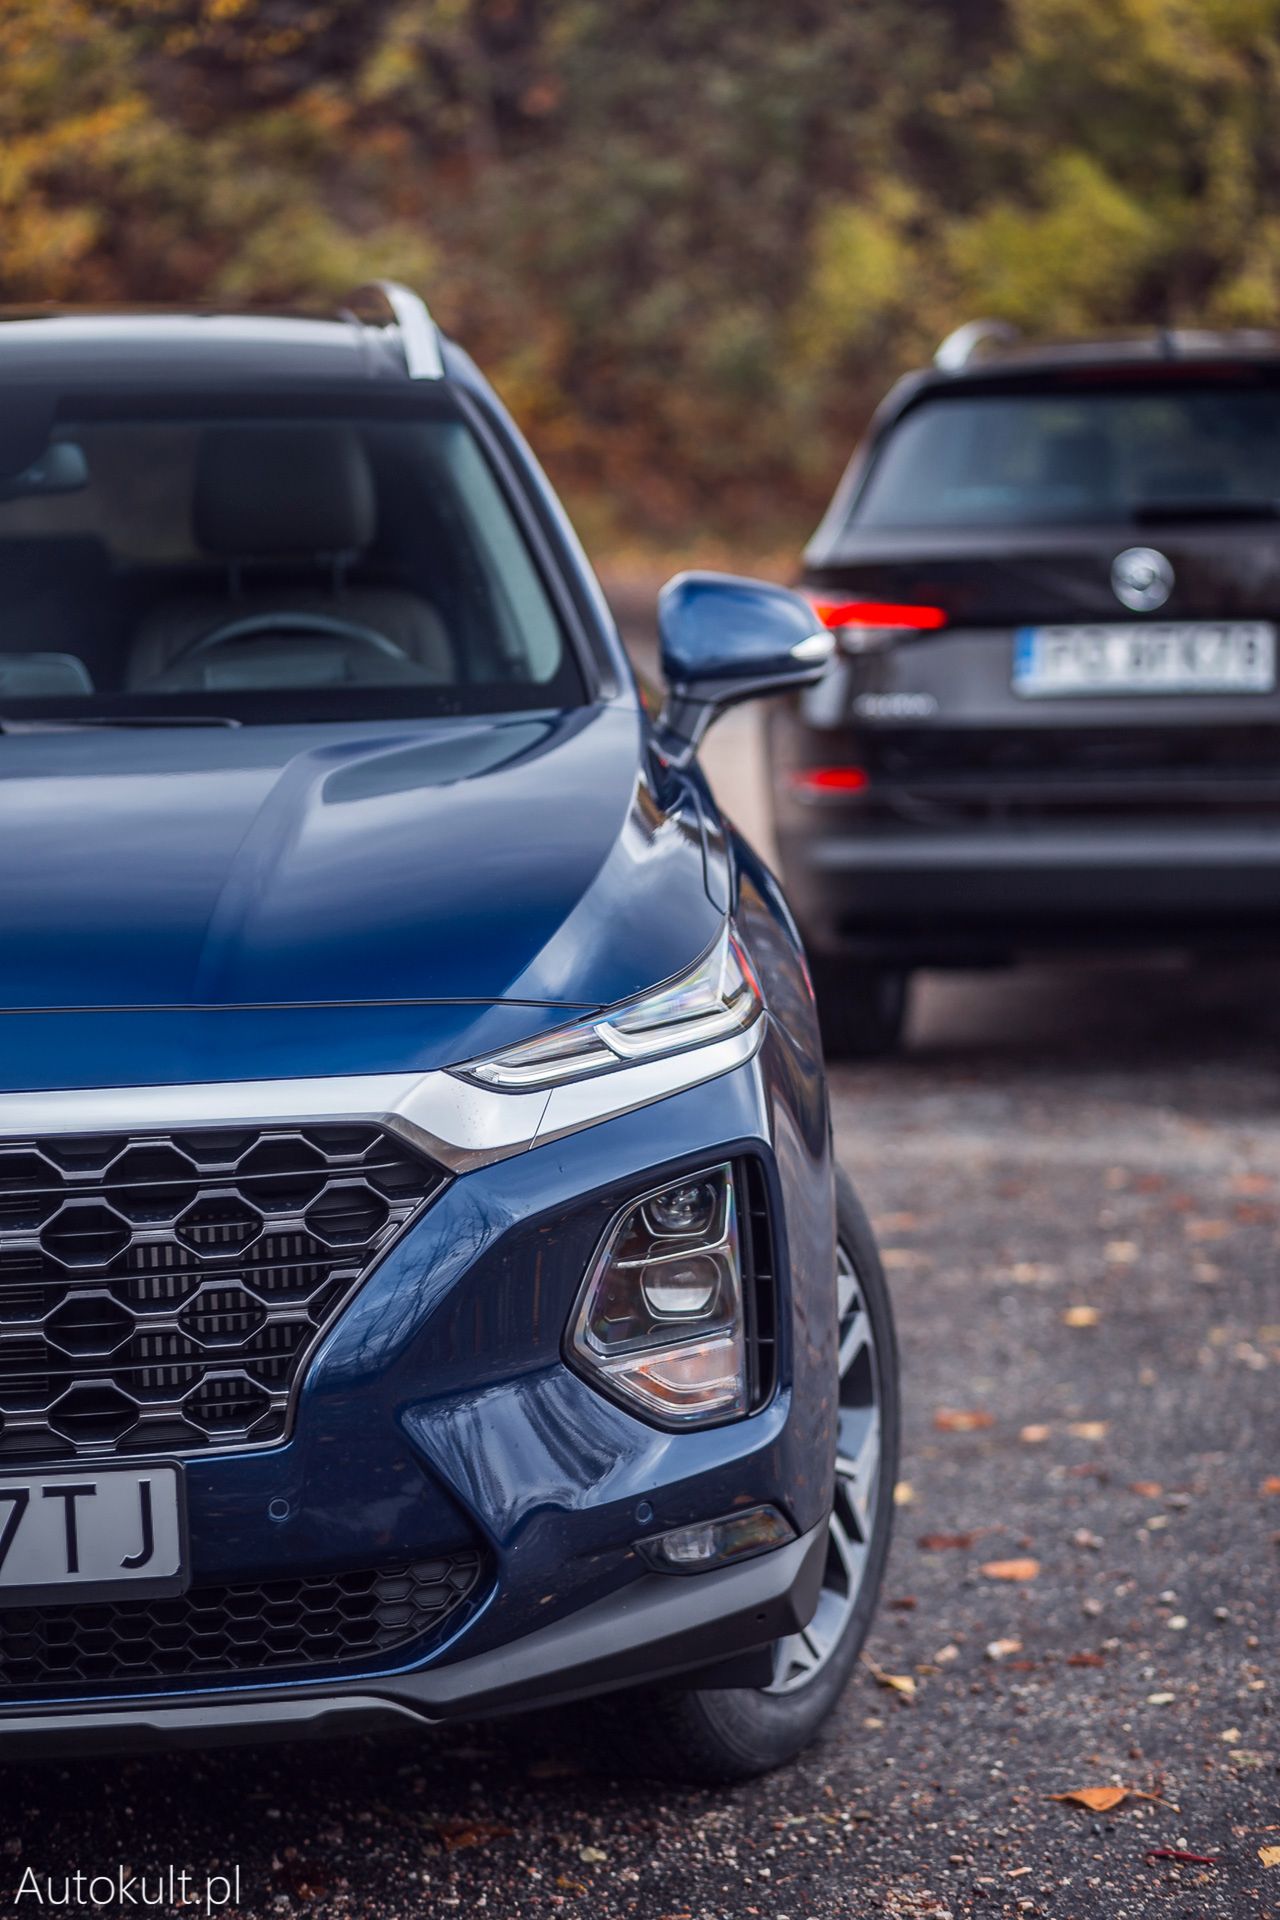 Hyundai Santa Fe 2.0 CRDi Platinum (2019) (fot. Konrad Skura)